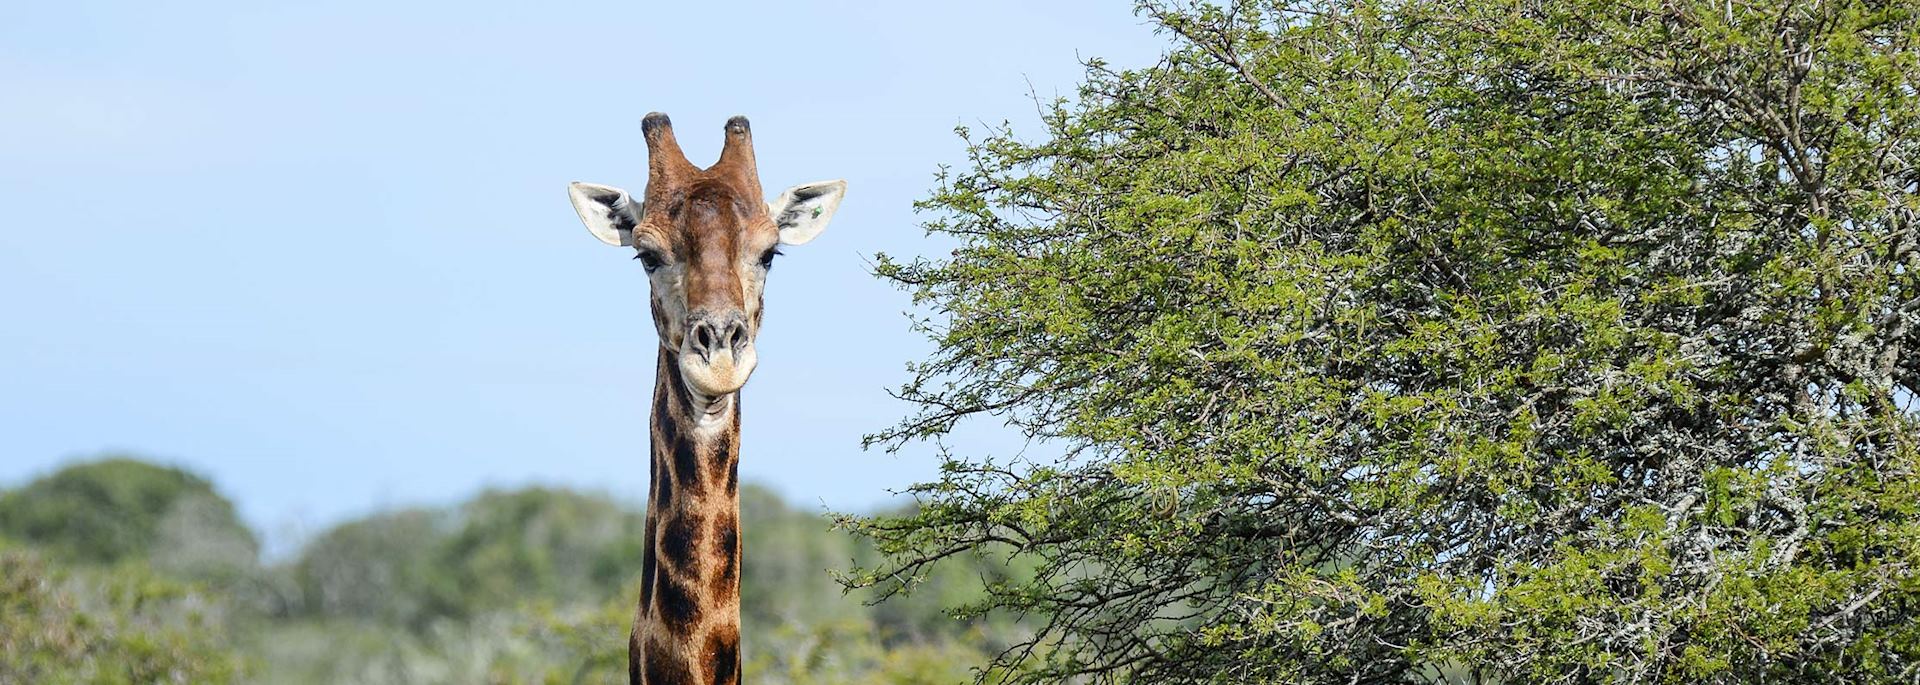 Giraffe in Amakhala Game Reserve